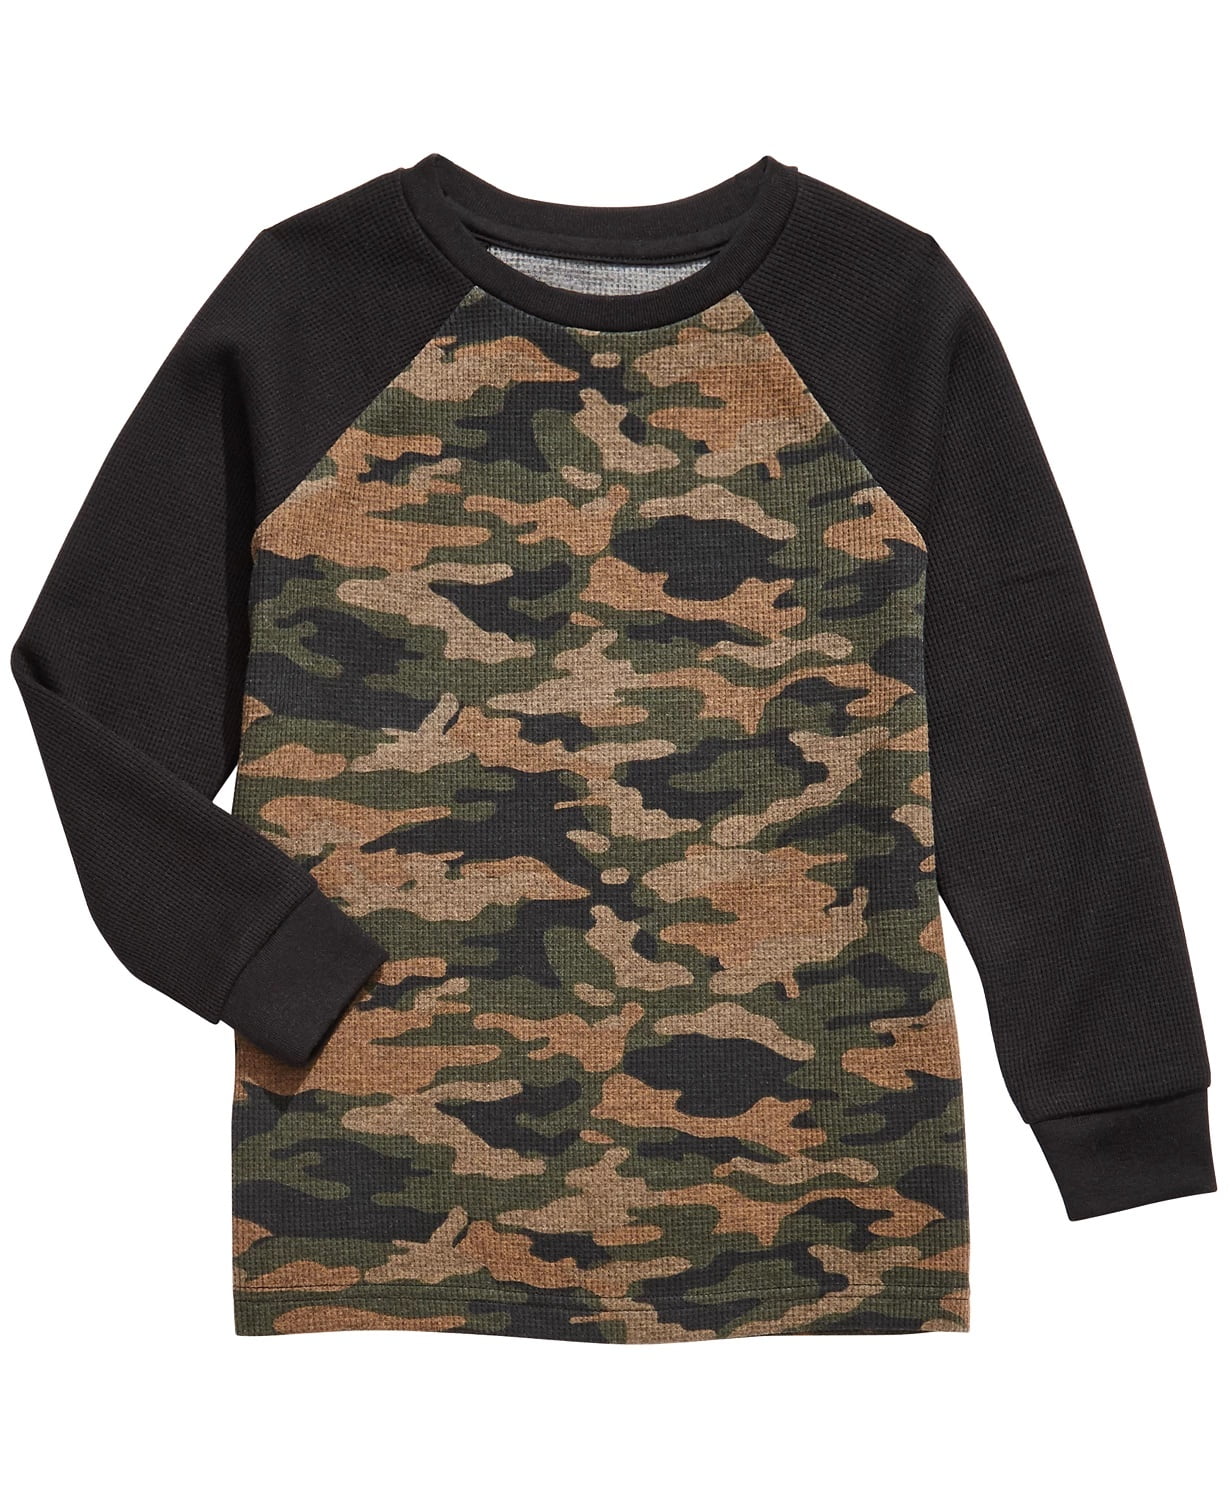 Epic Threads Toddler Boys Camo-Print Thermal T-Shirt Green Size 3T REG ...